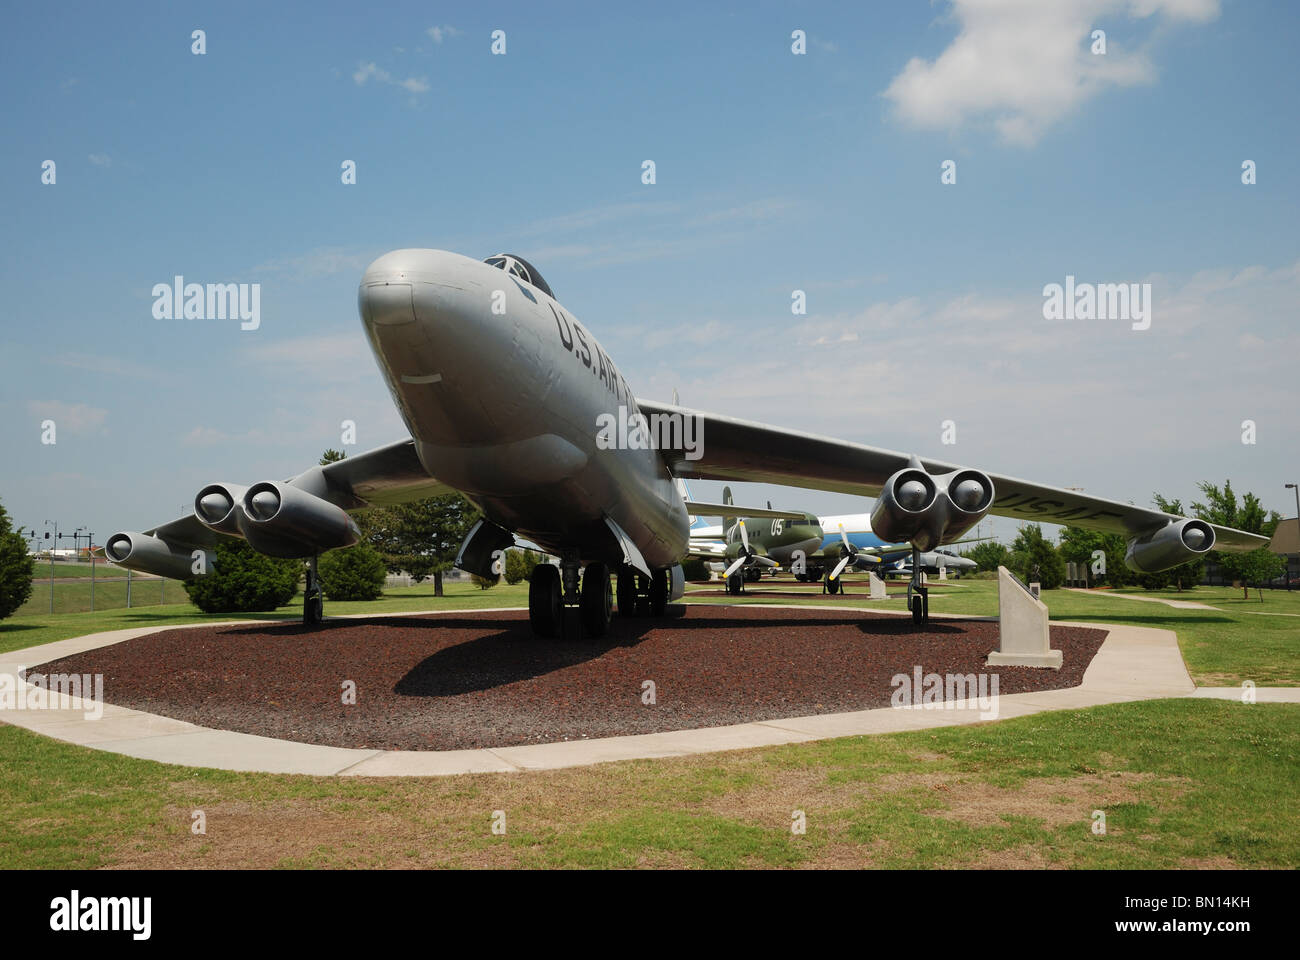 A B-47 'Stratojet' bomber on display at the Tinker Air Force Base, Oklahoma City, Oklahoma, USA. Stock Photo